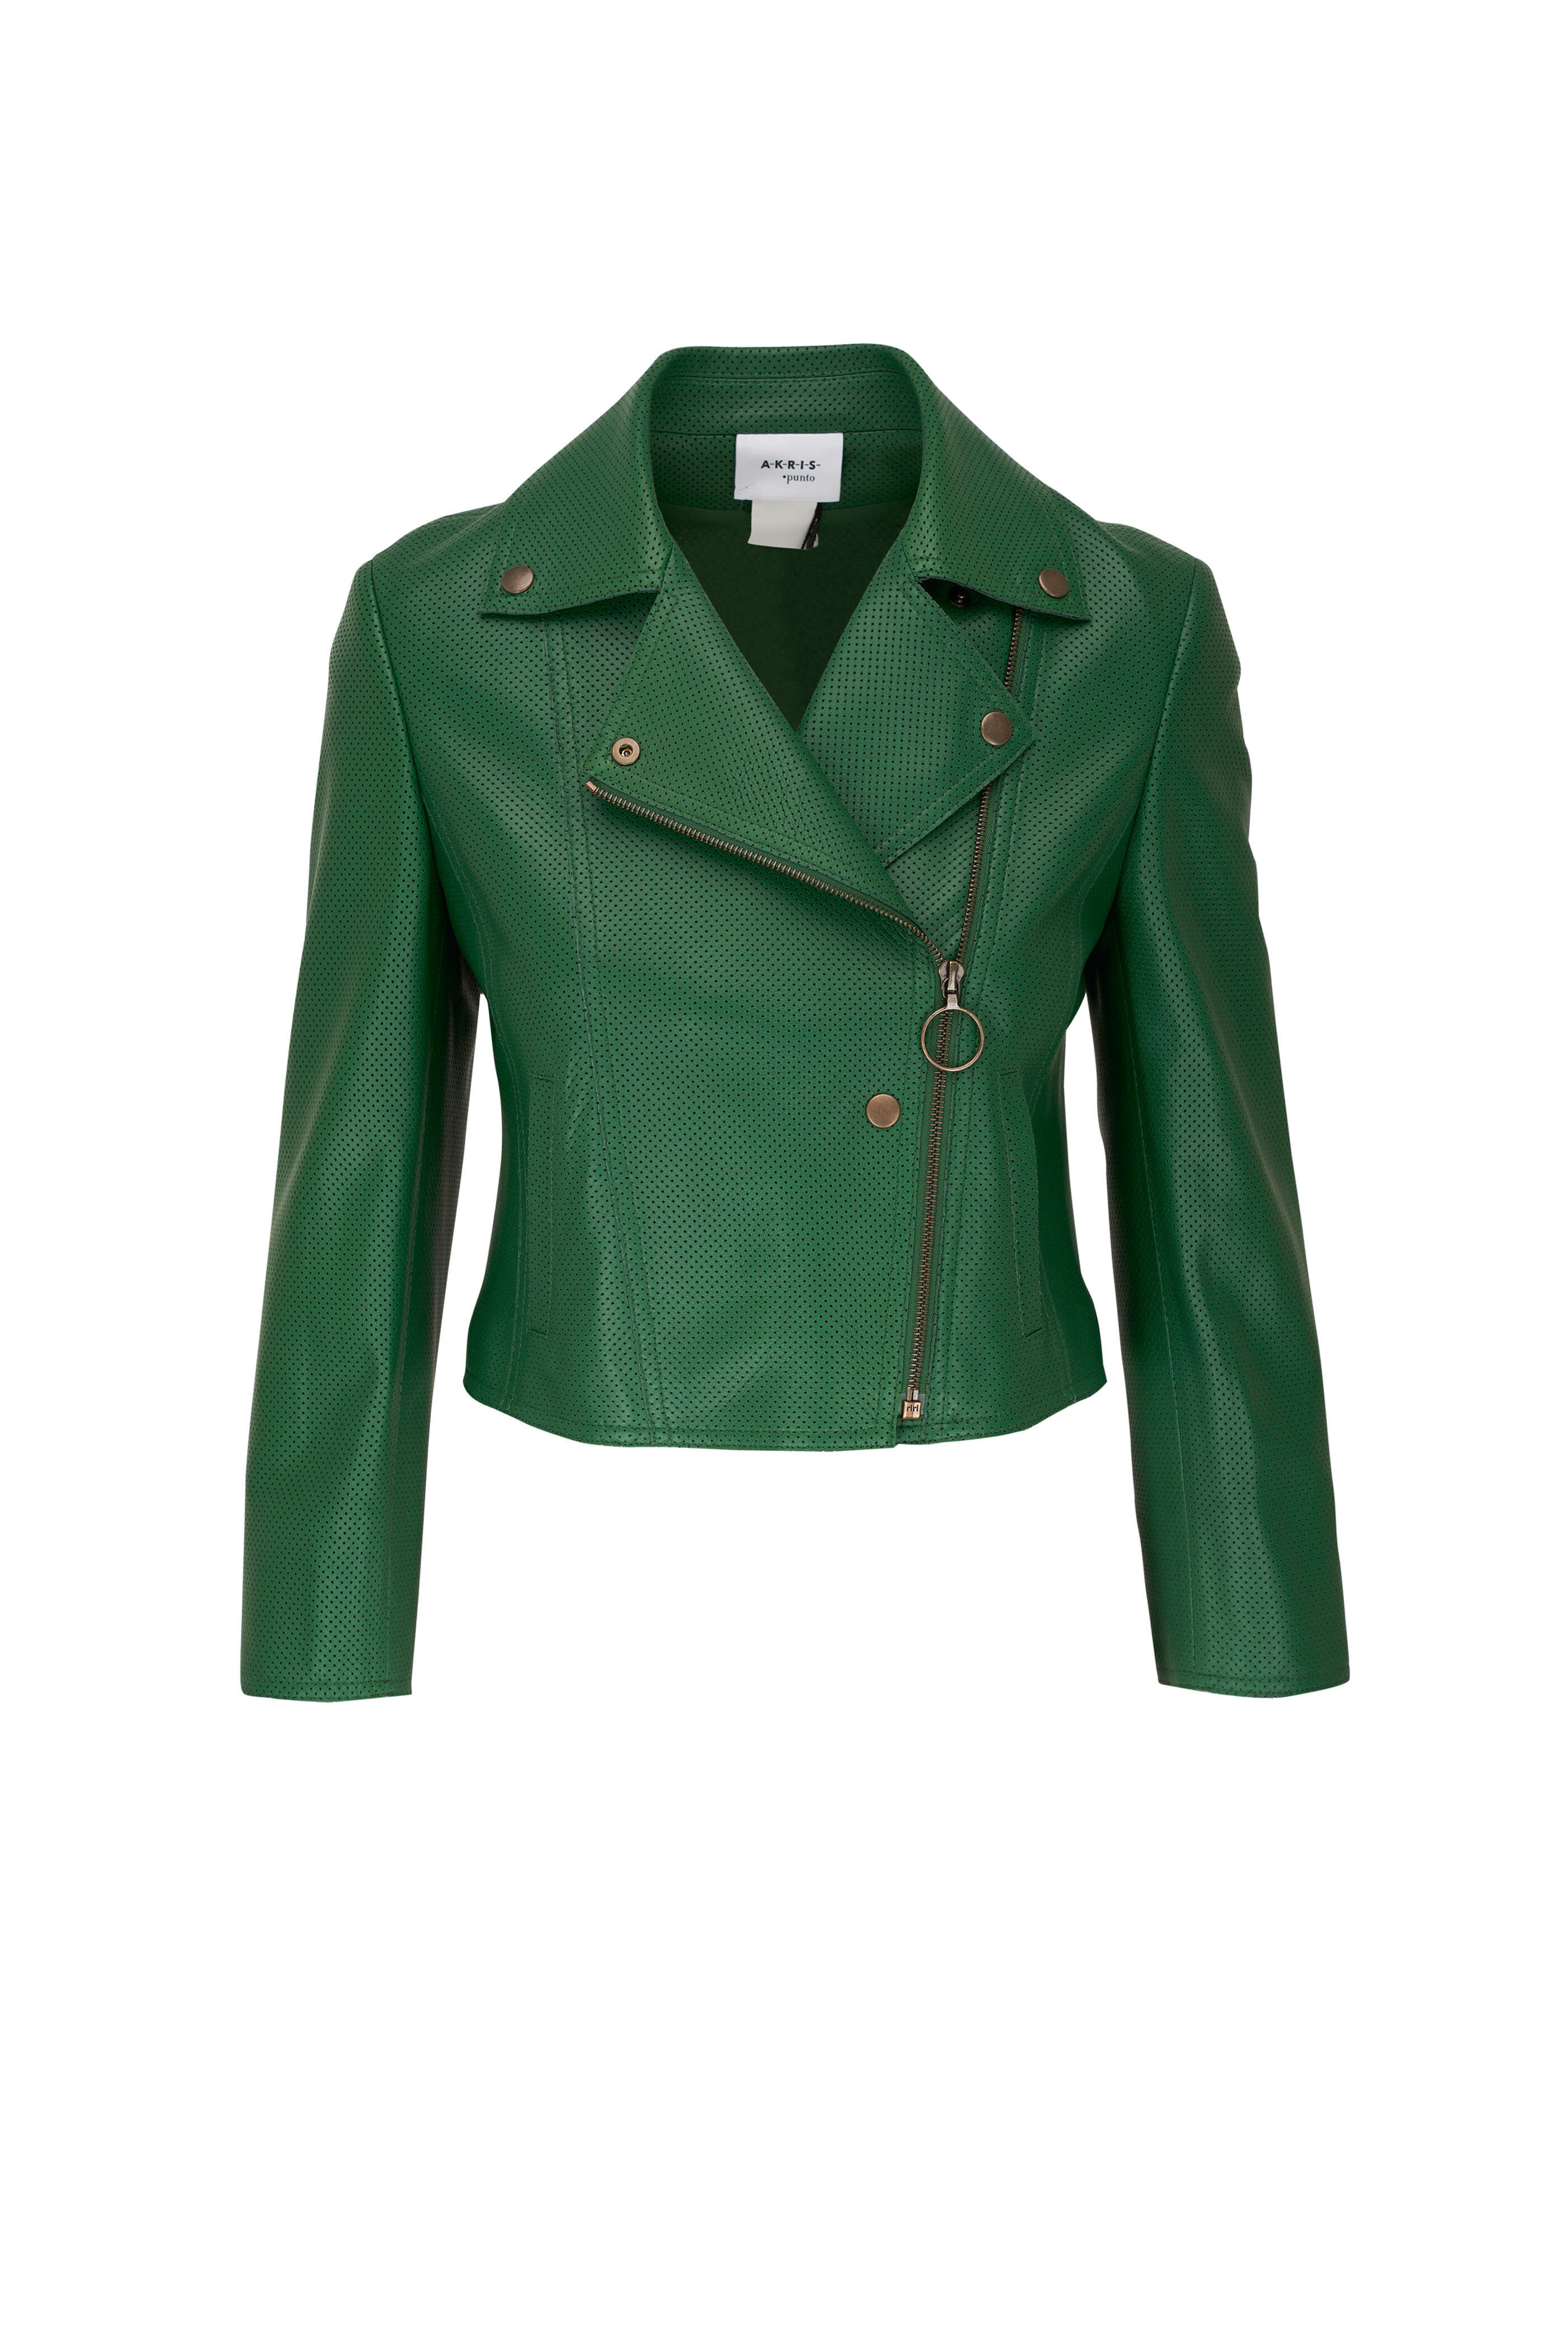 Akris Punto - Leaf Green Perforated Leather Jacket